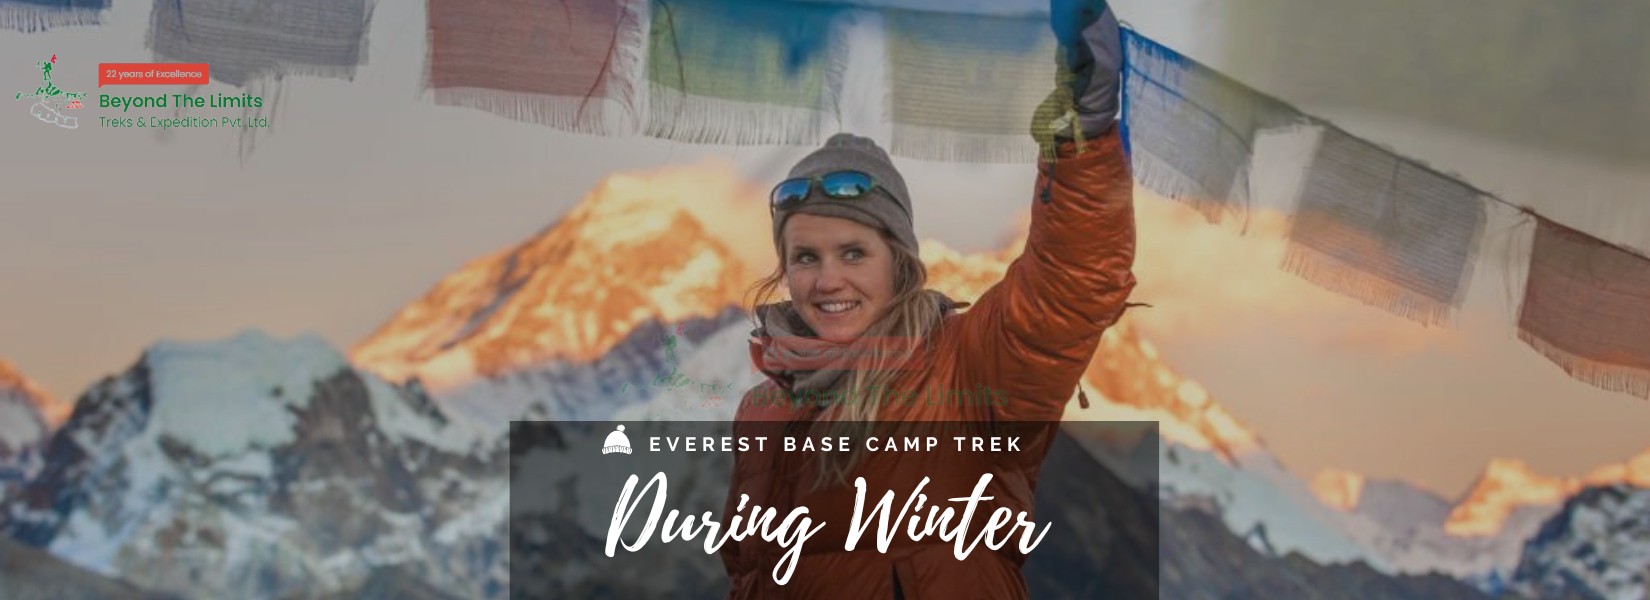 Everest Base Camp Trek During Winter